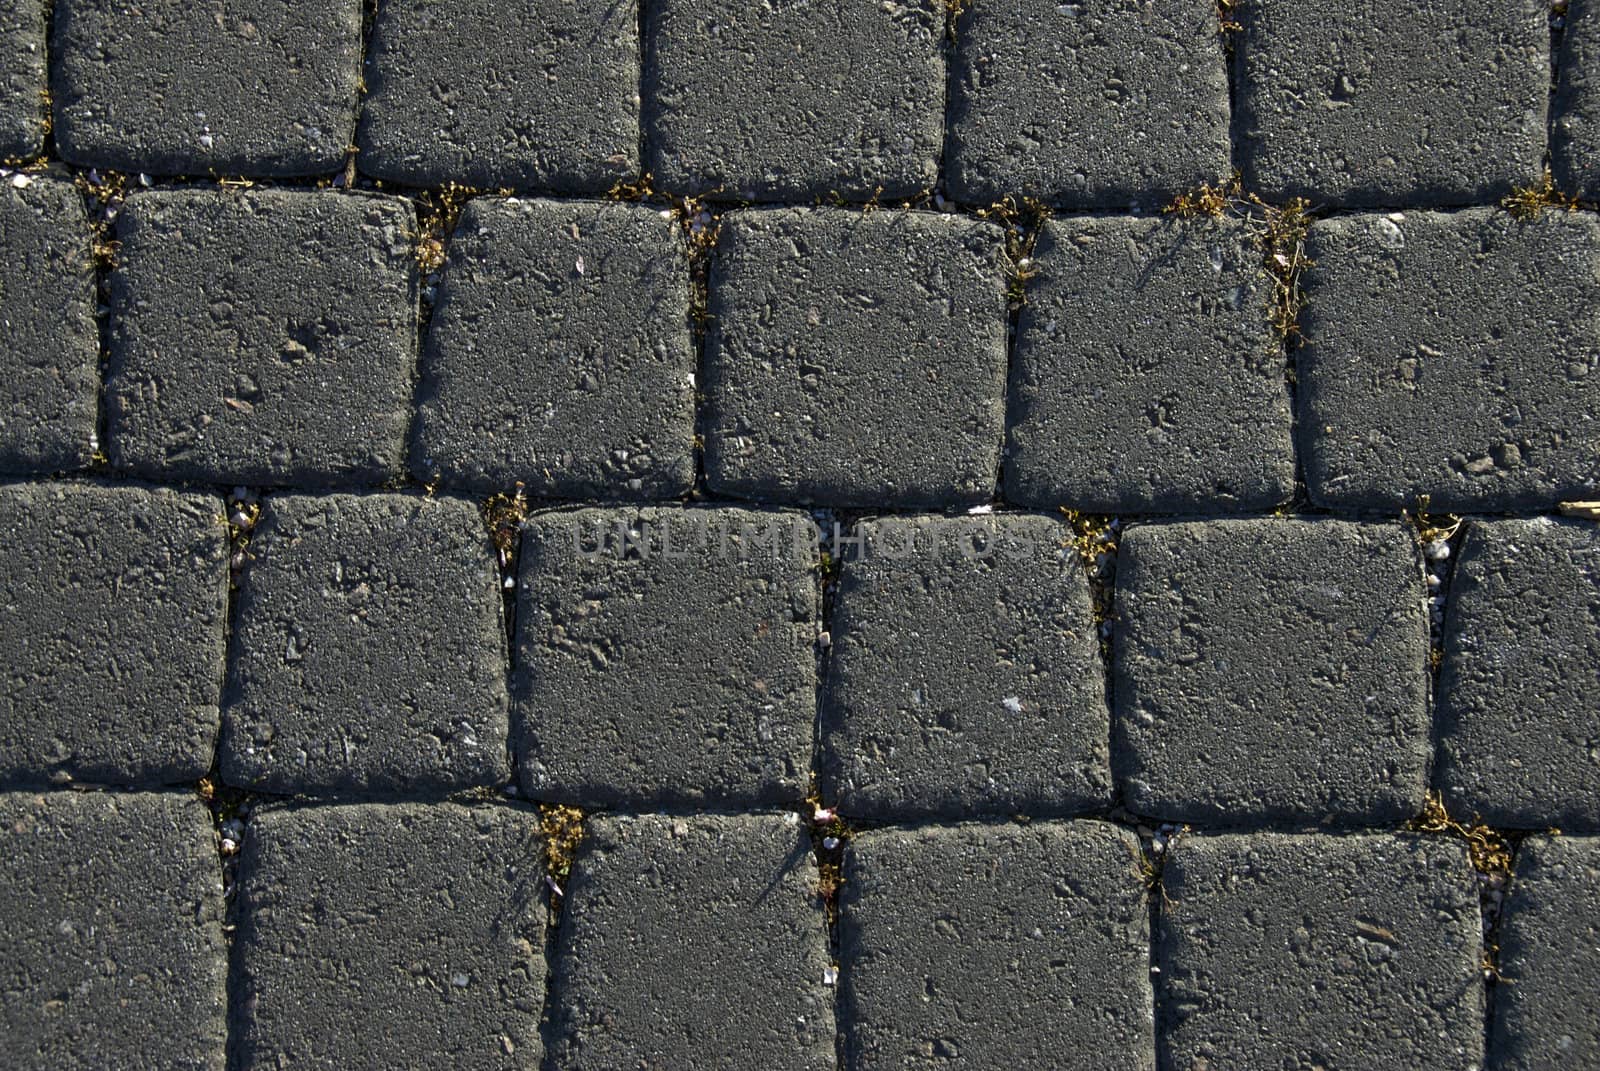 Black Brick Wall by npologuy